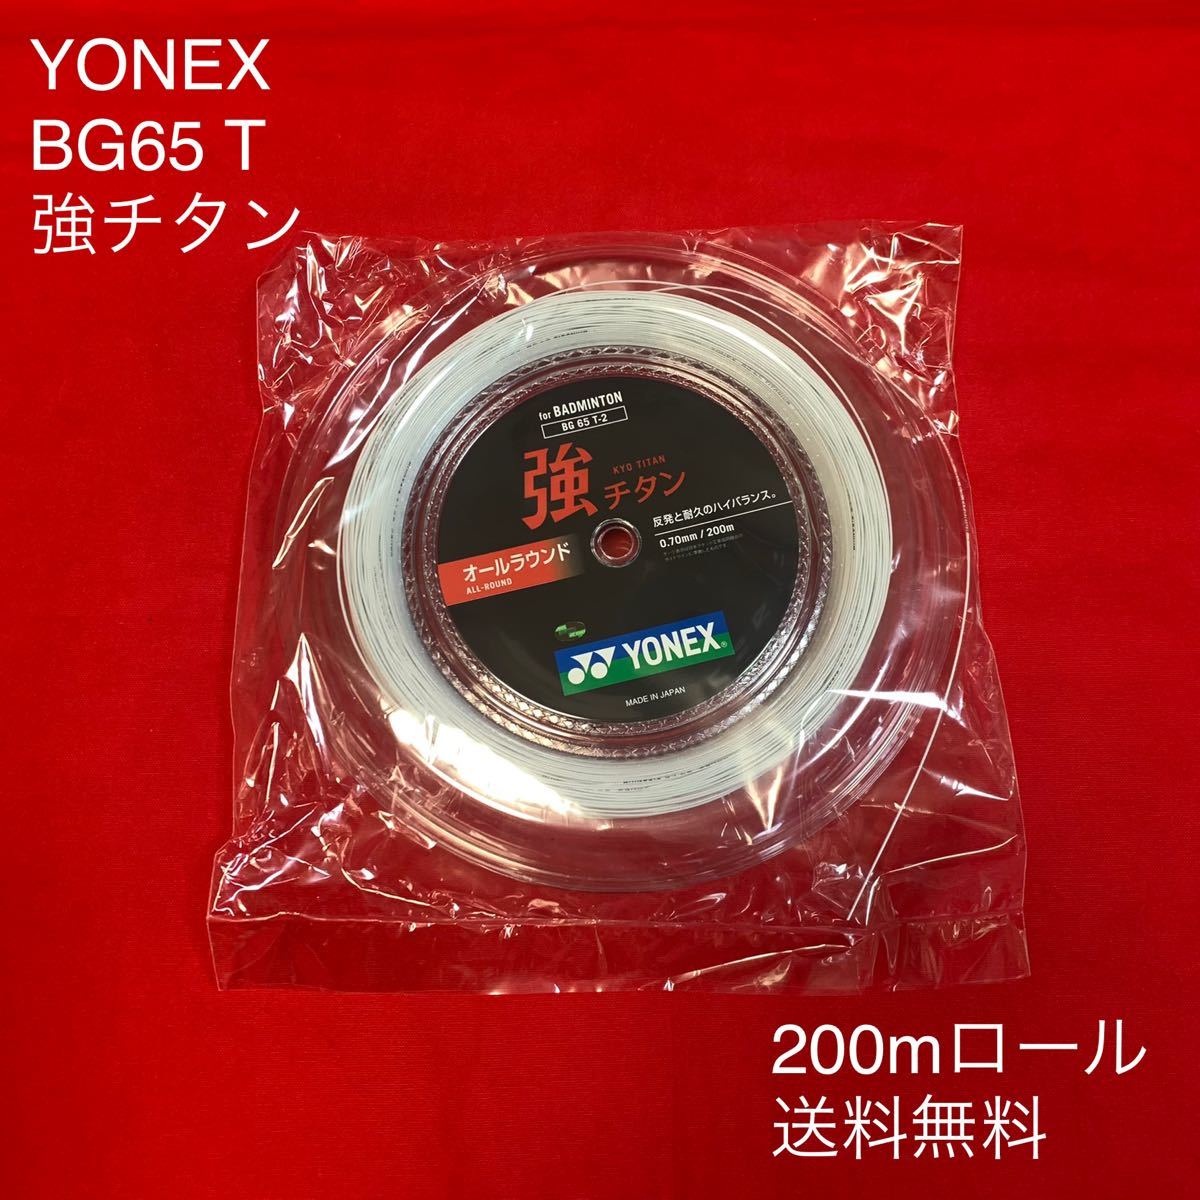 YONEX 強チタン mロール ホワイト 再入荷 円